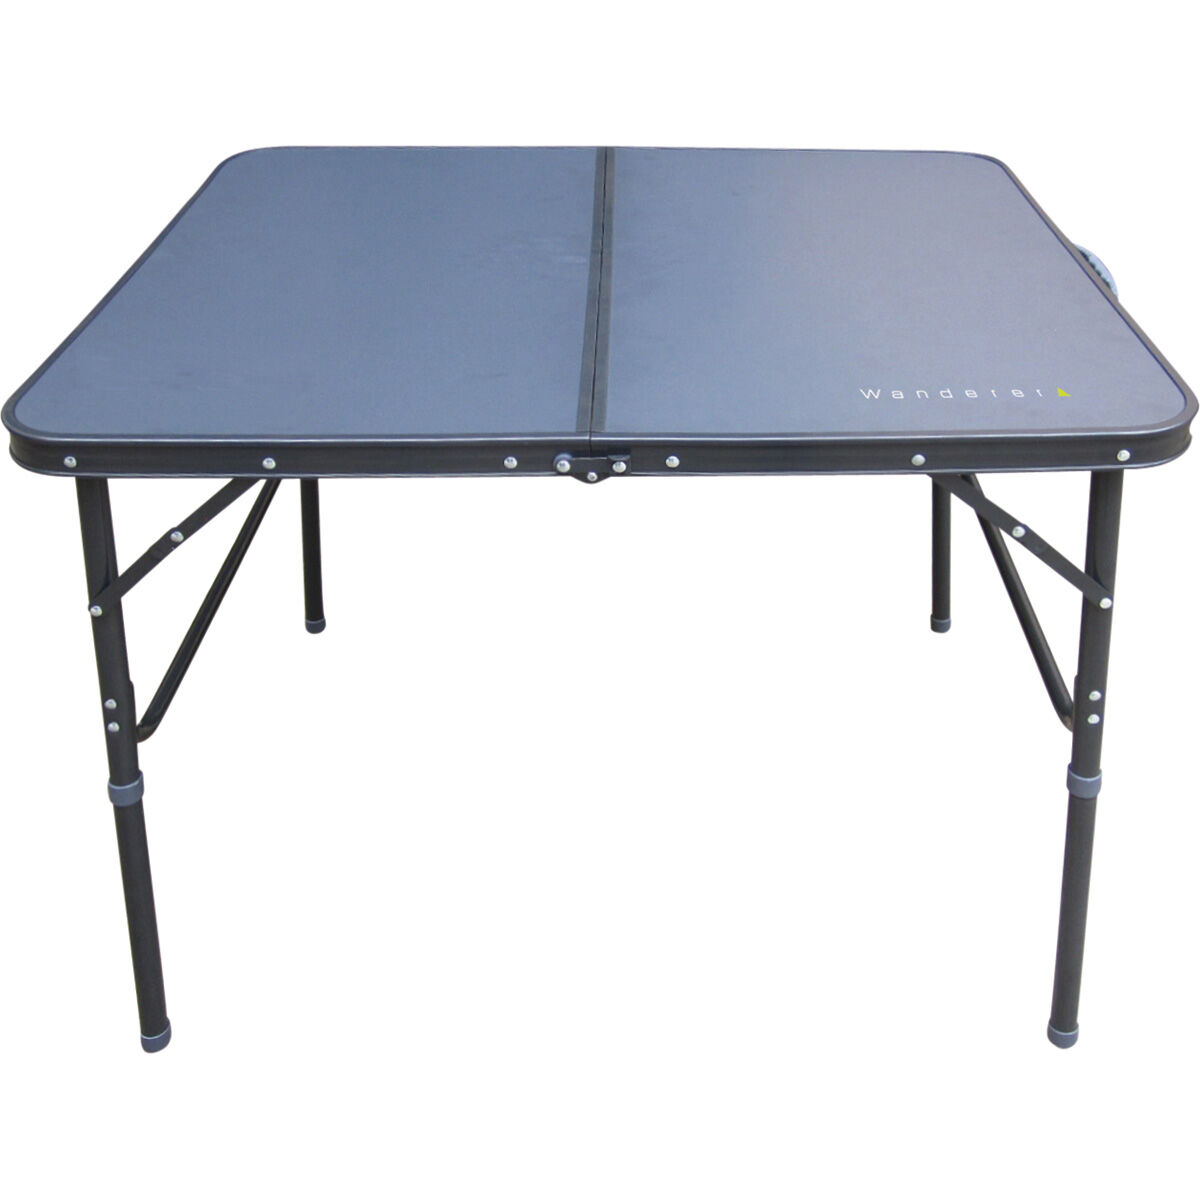 aluminium fold up table